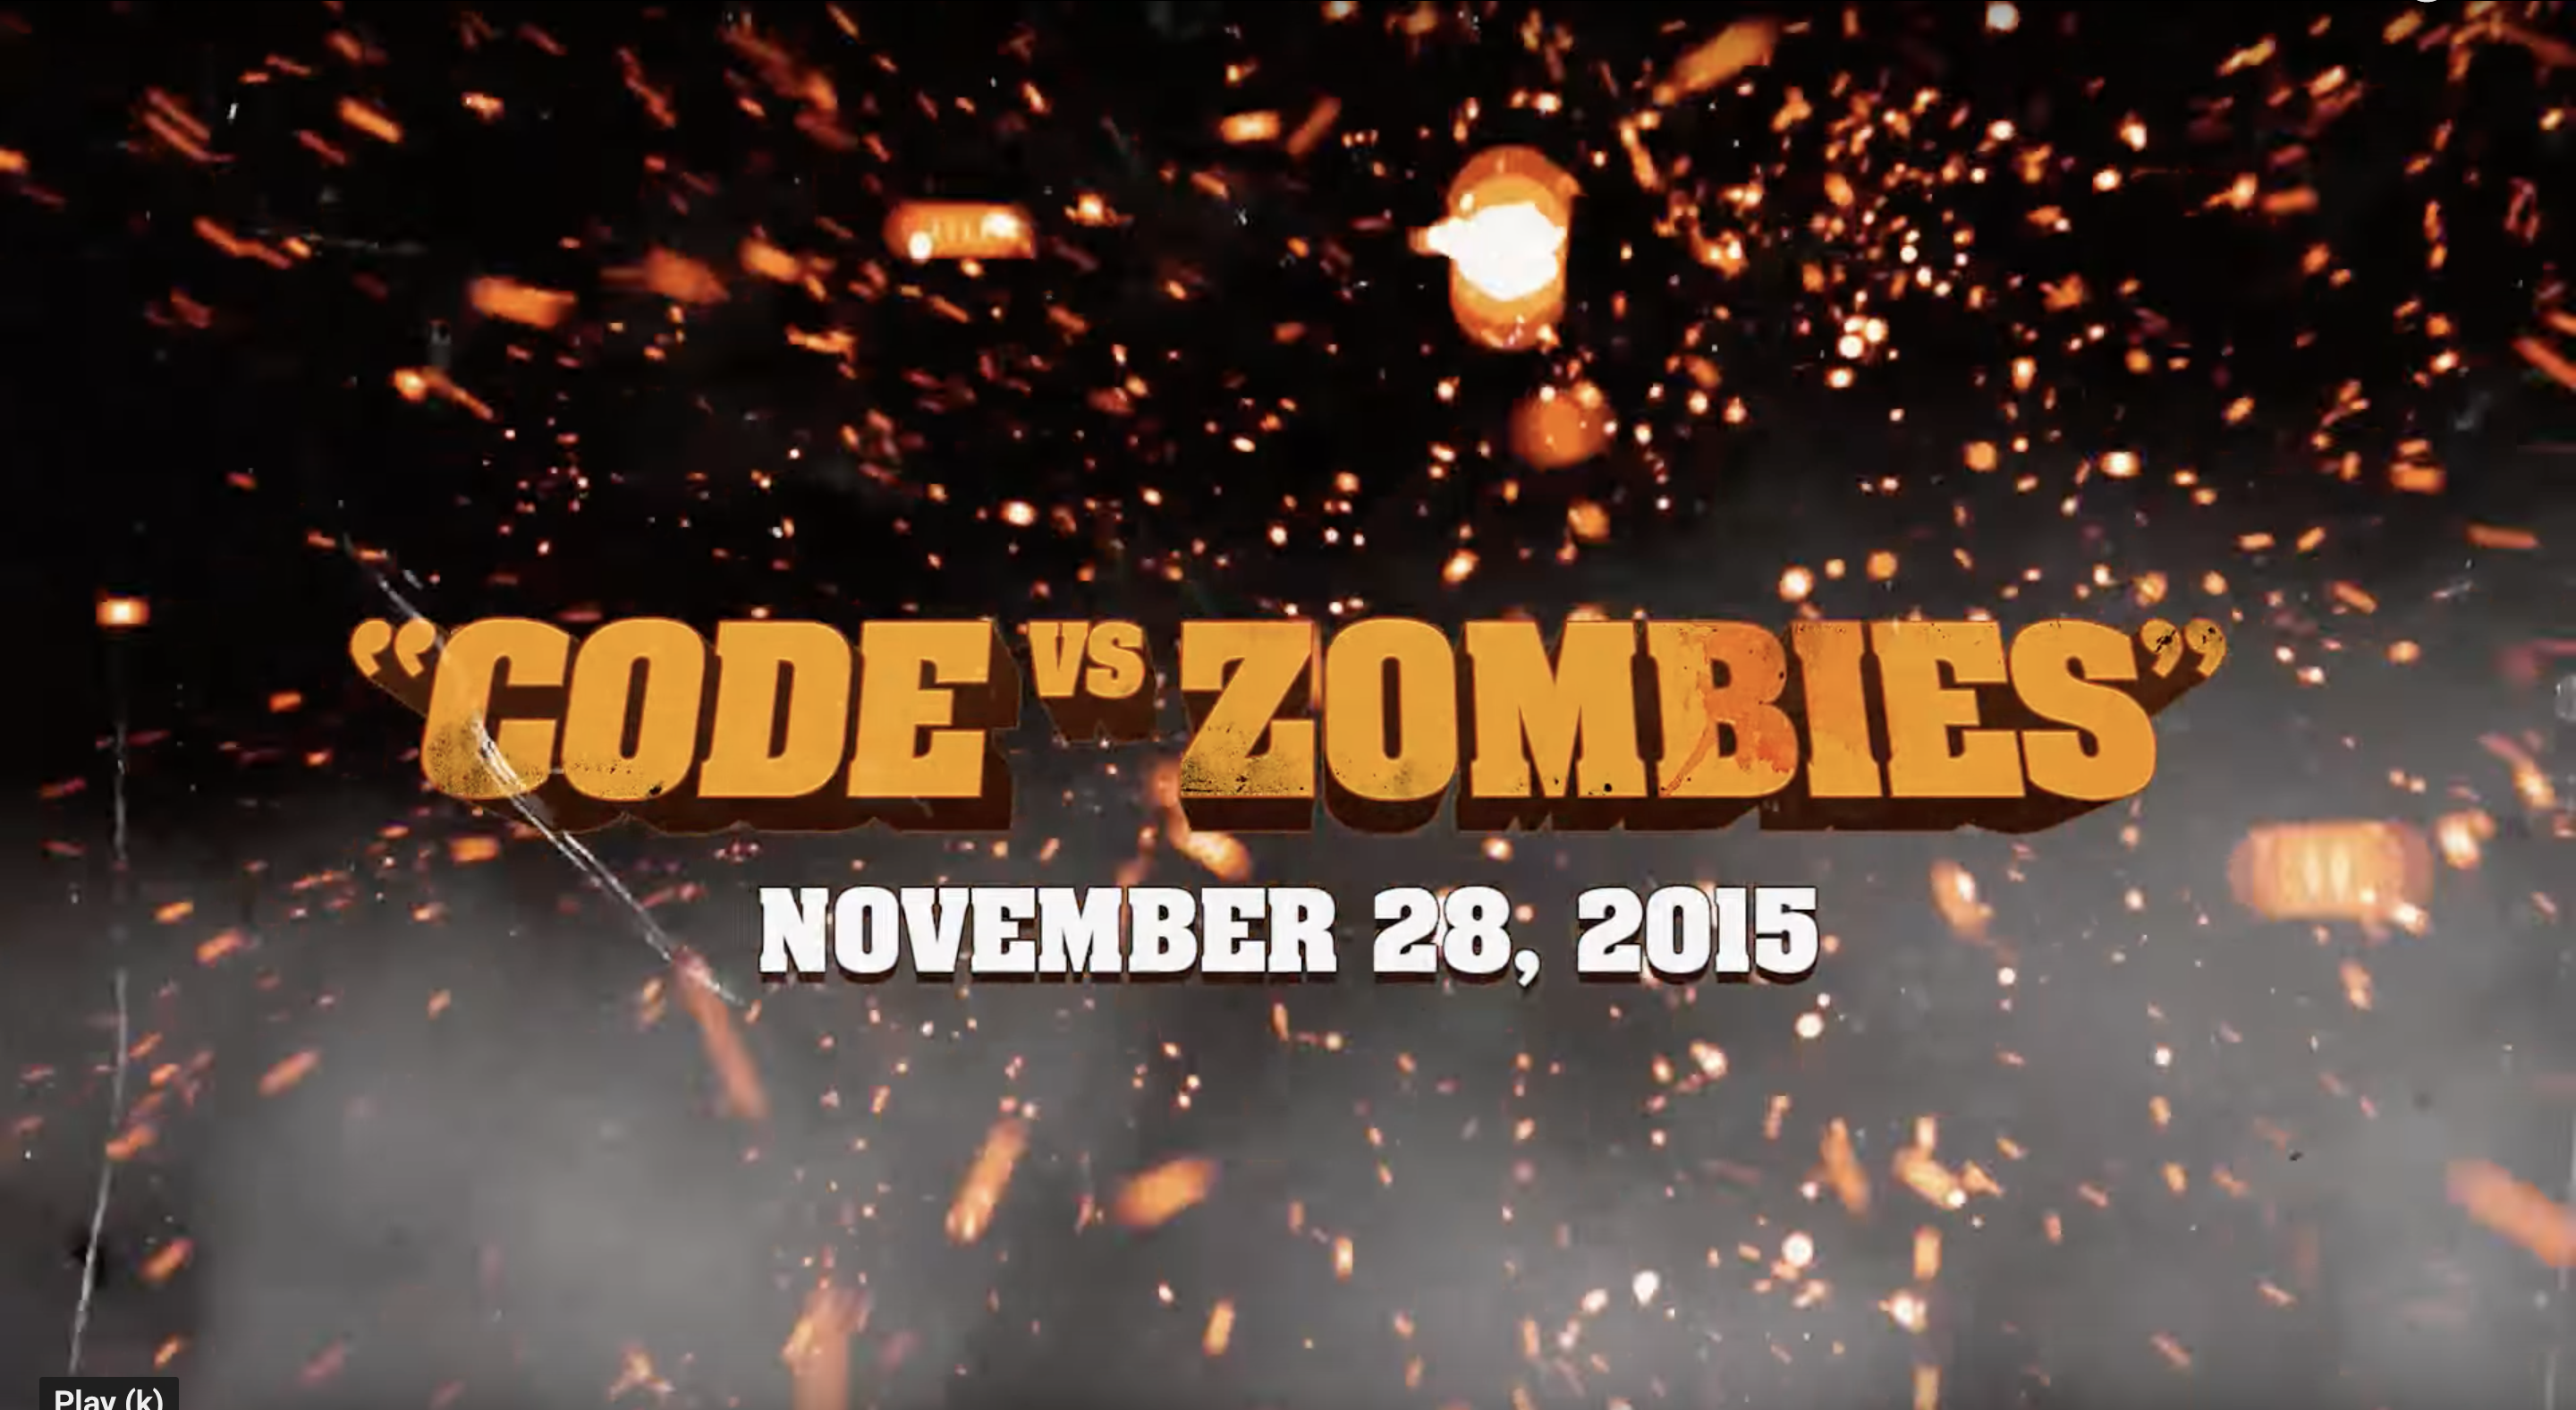 Intersec sponsors 'Code vs. Zombies' contest